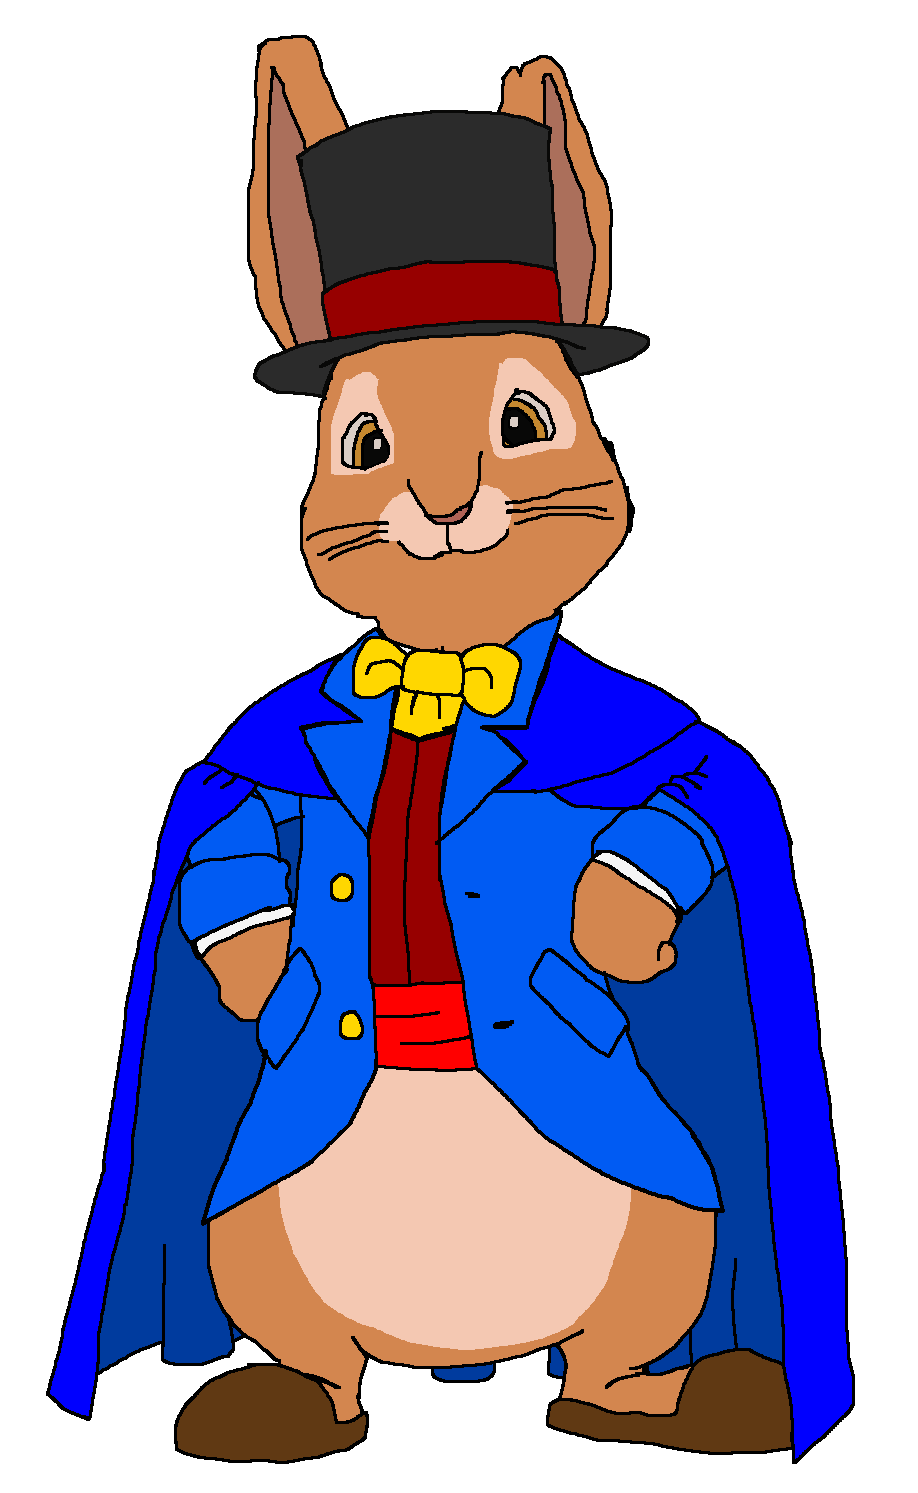 Peter Rabbit - Wikipedia